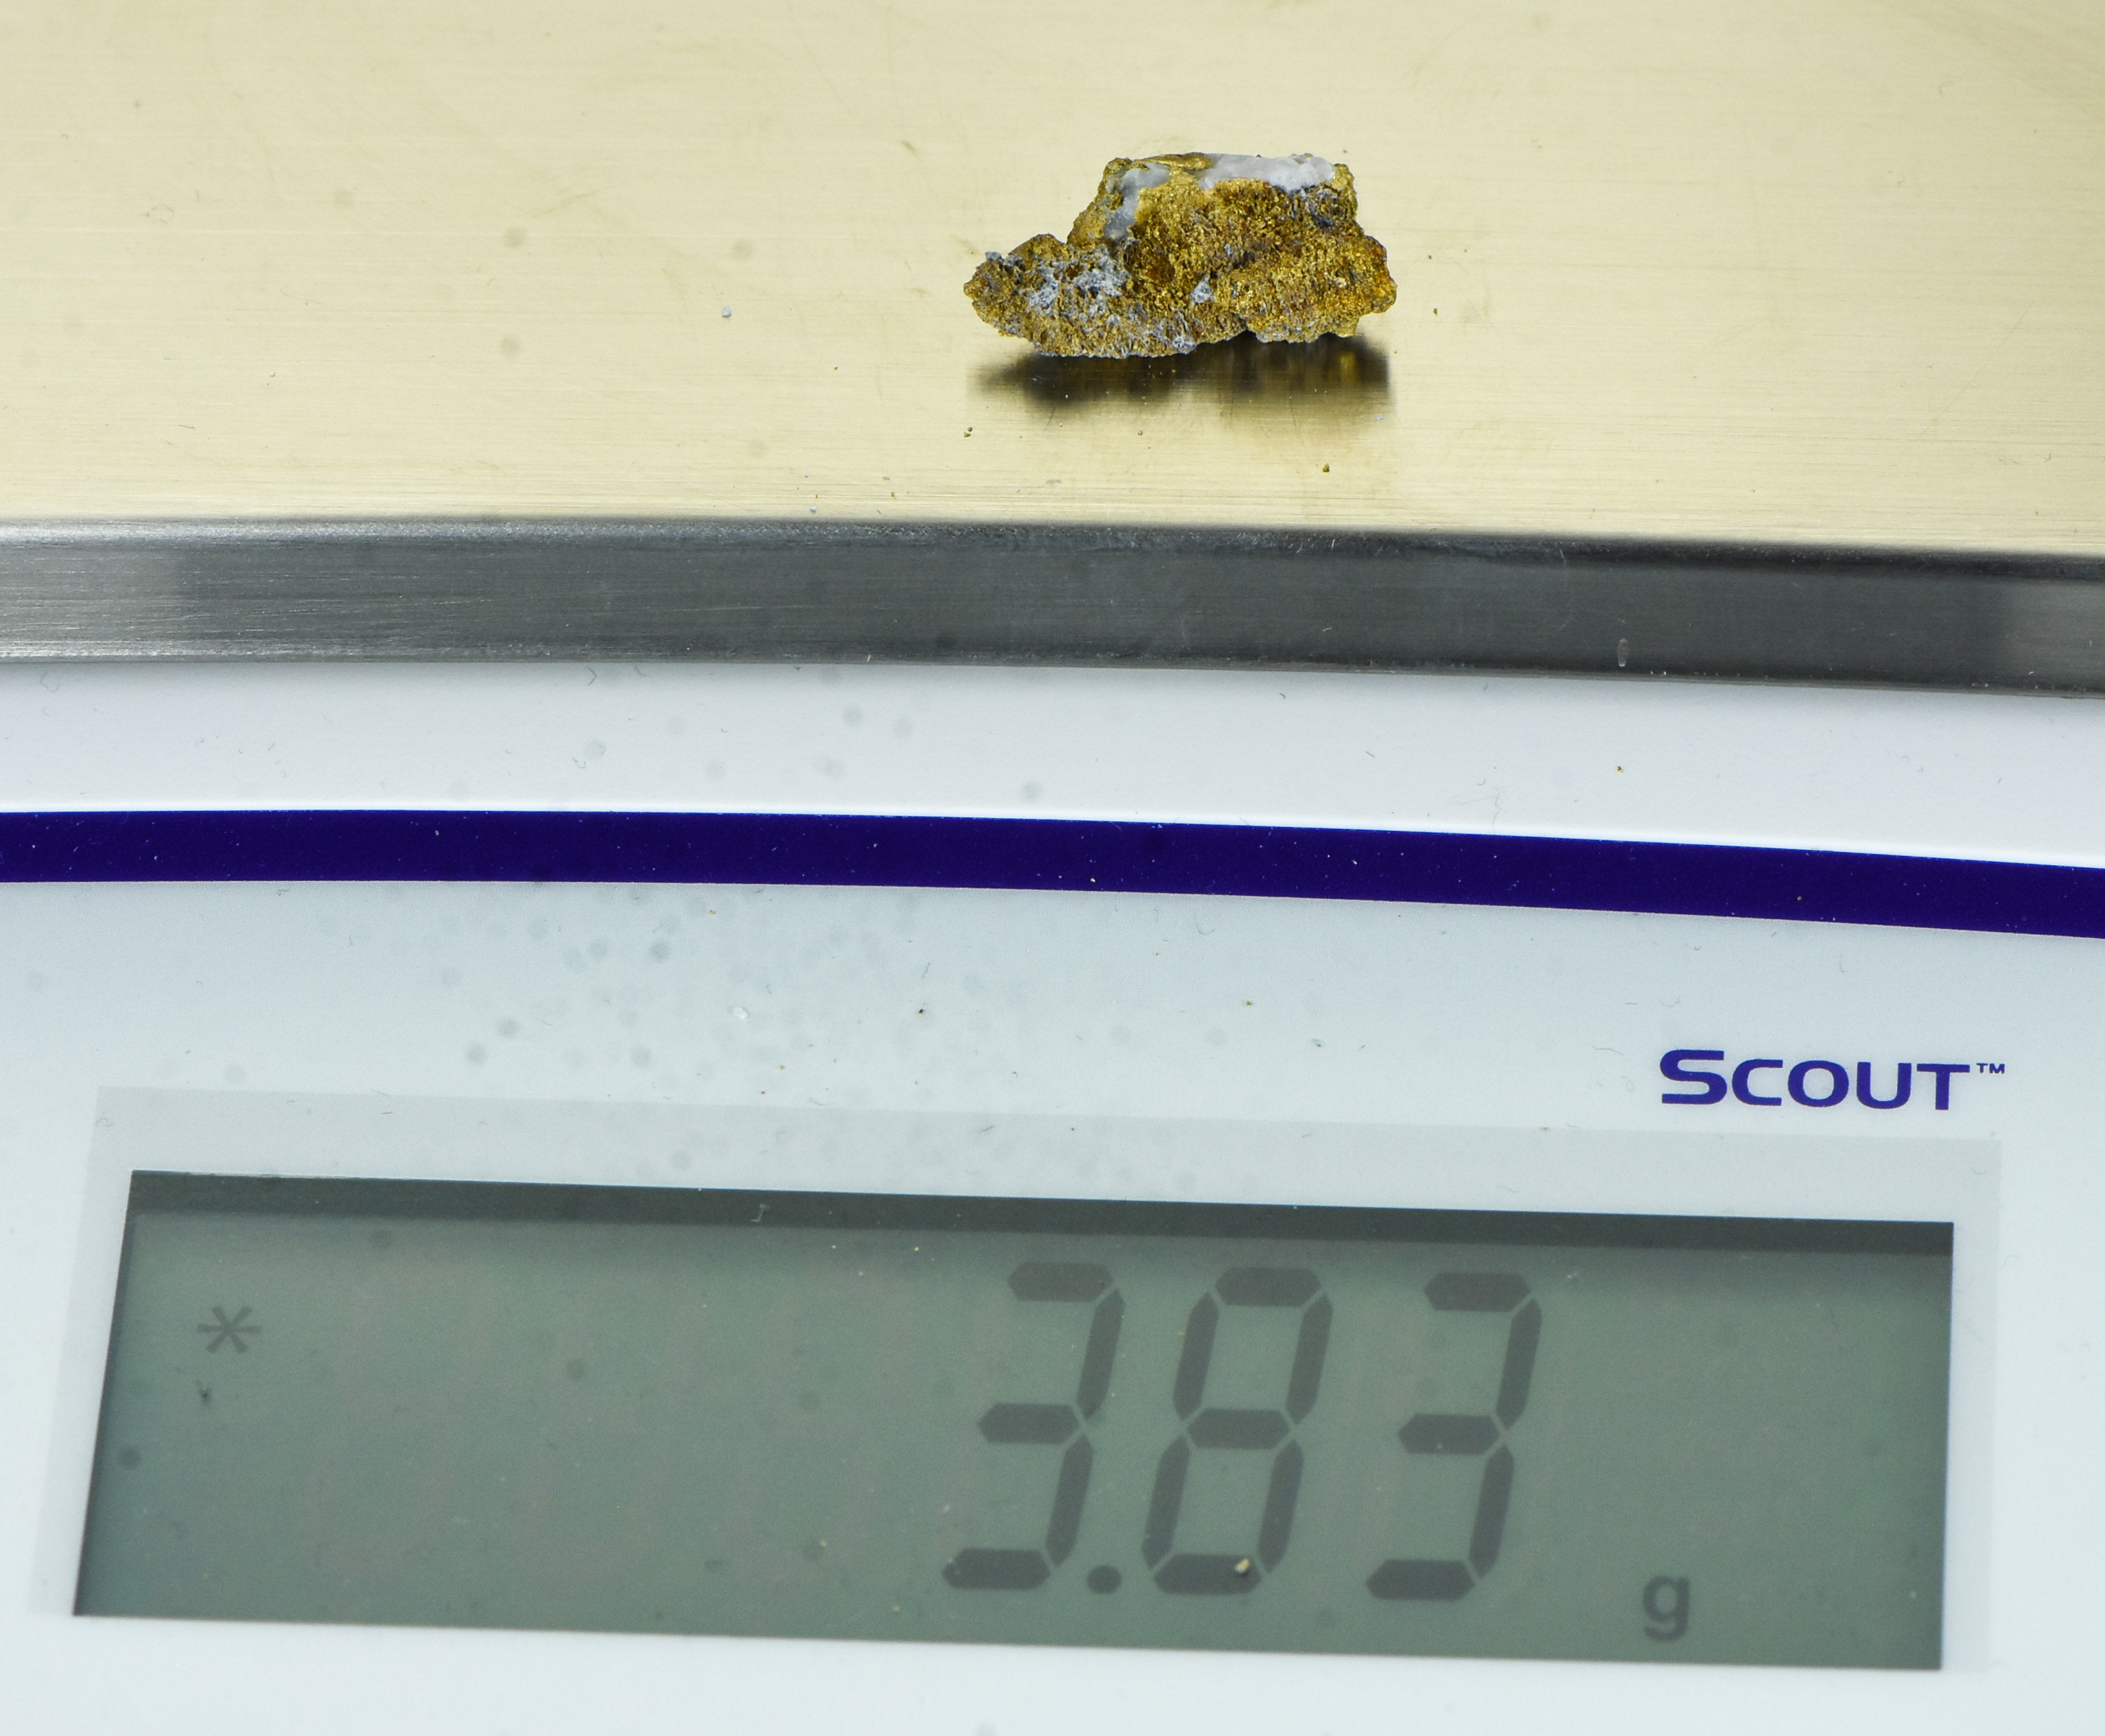 #OM-57 Crystalline Gold Nugget Specimen 3.83 Grams Oriental Mine Sierra County California Rare